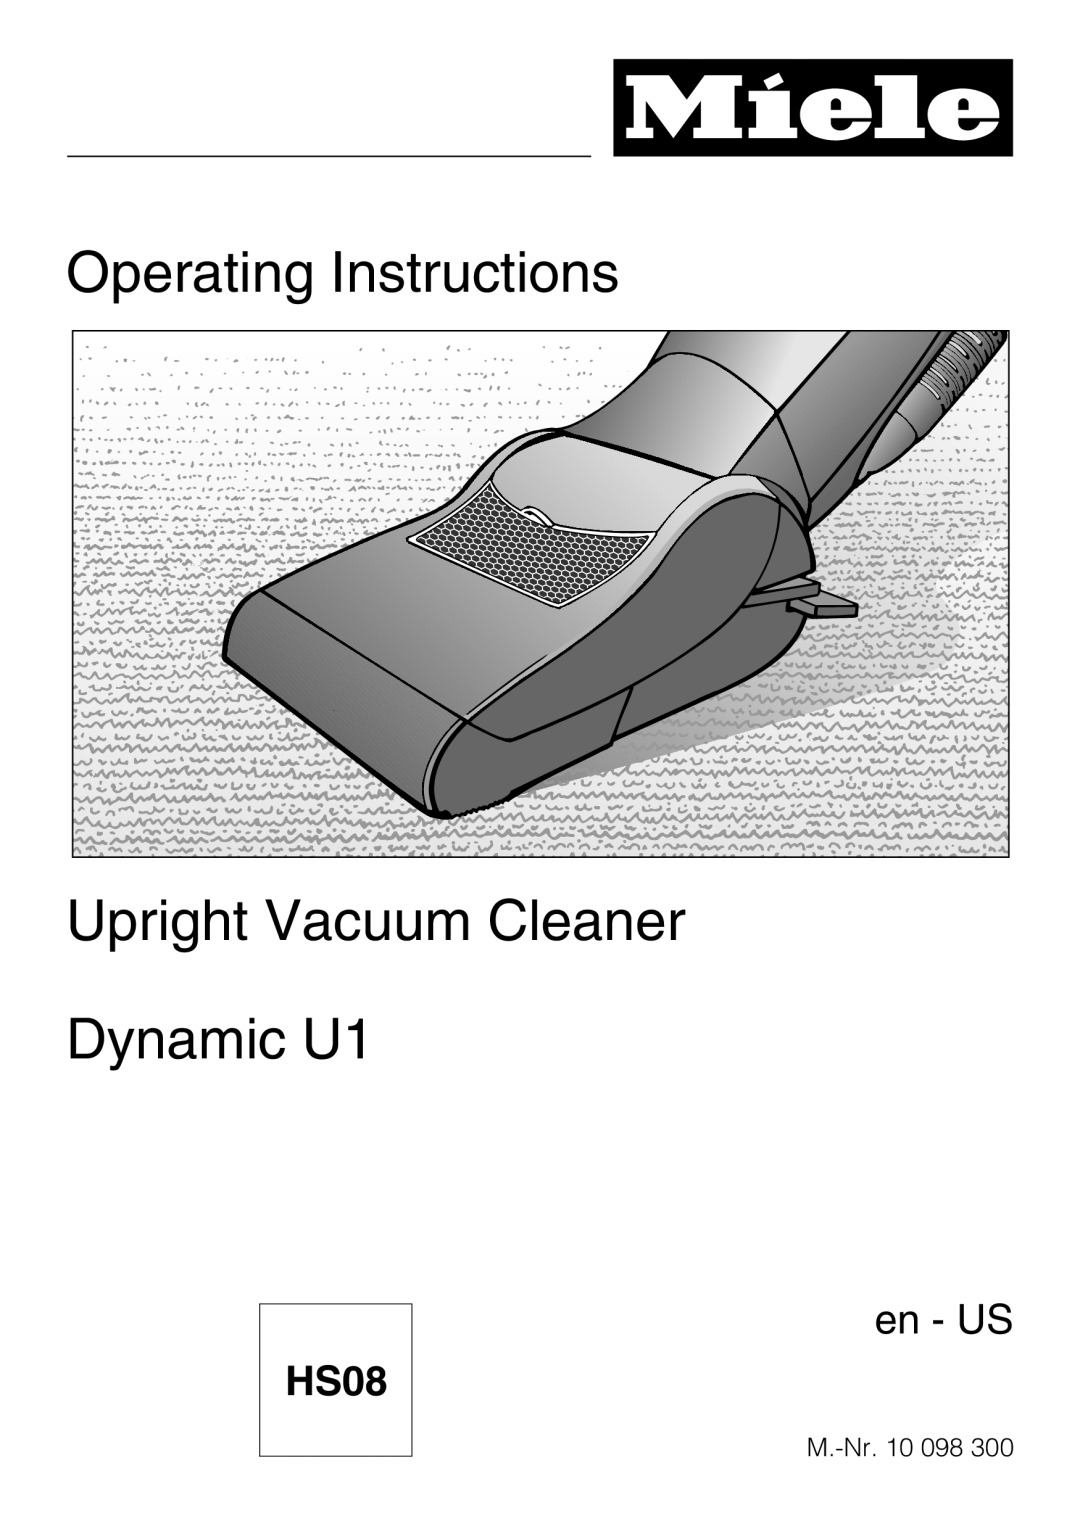 Miele HS08 manual Operating Instructions, Upright Vacuum Cleaner Dynamic U1, en - US 